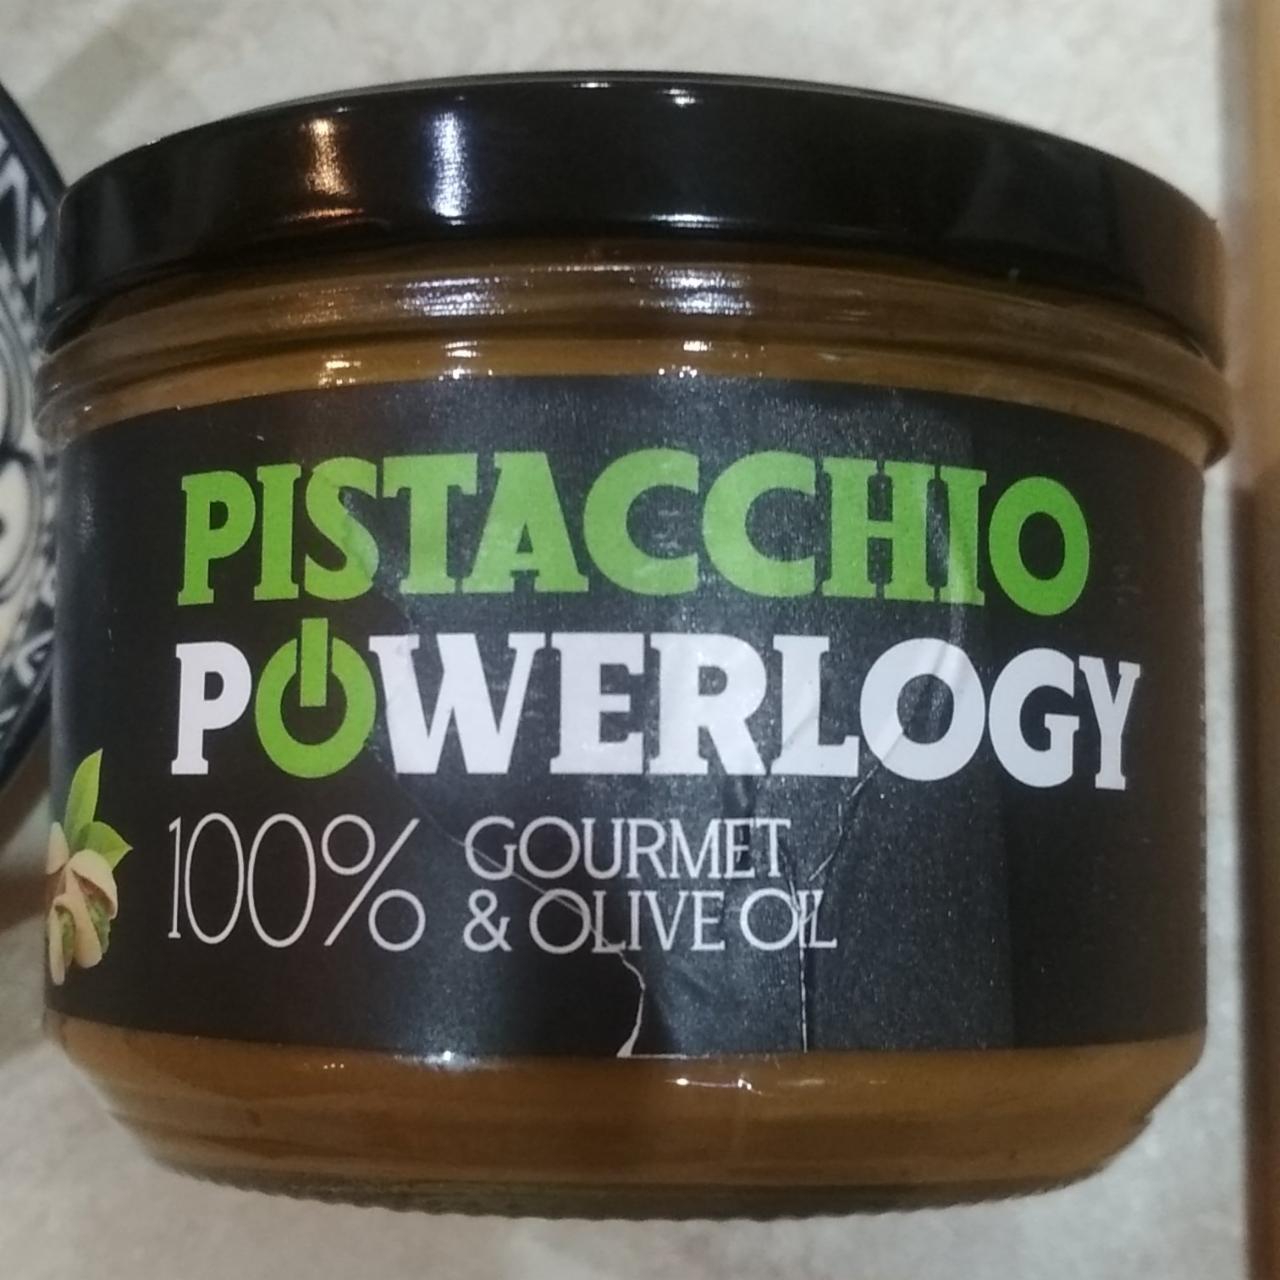 Fotografie - Pistacchio Powerlogy 100% Gourmet & Olive oil